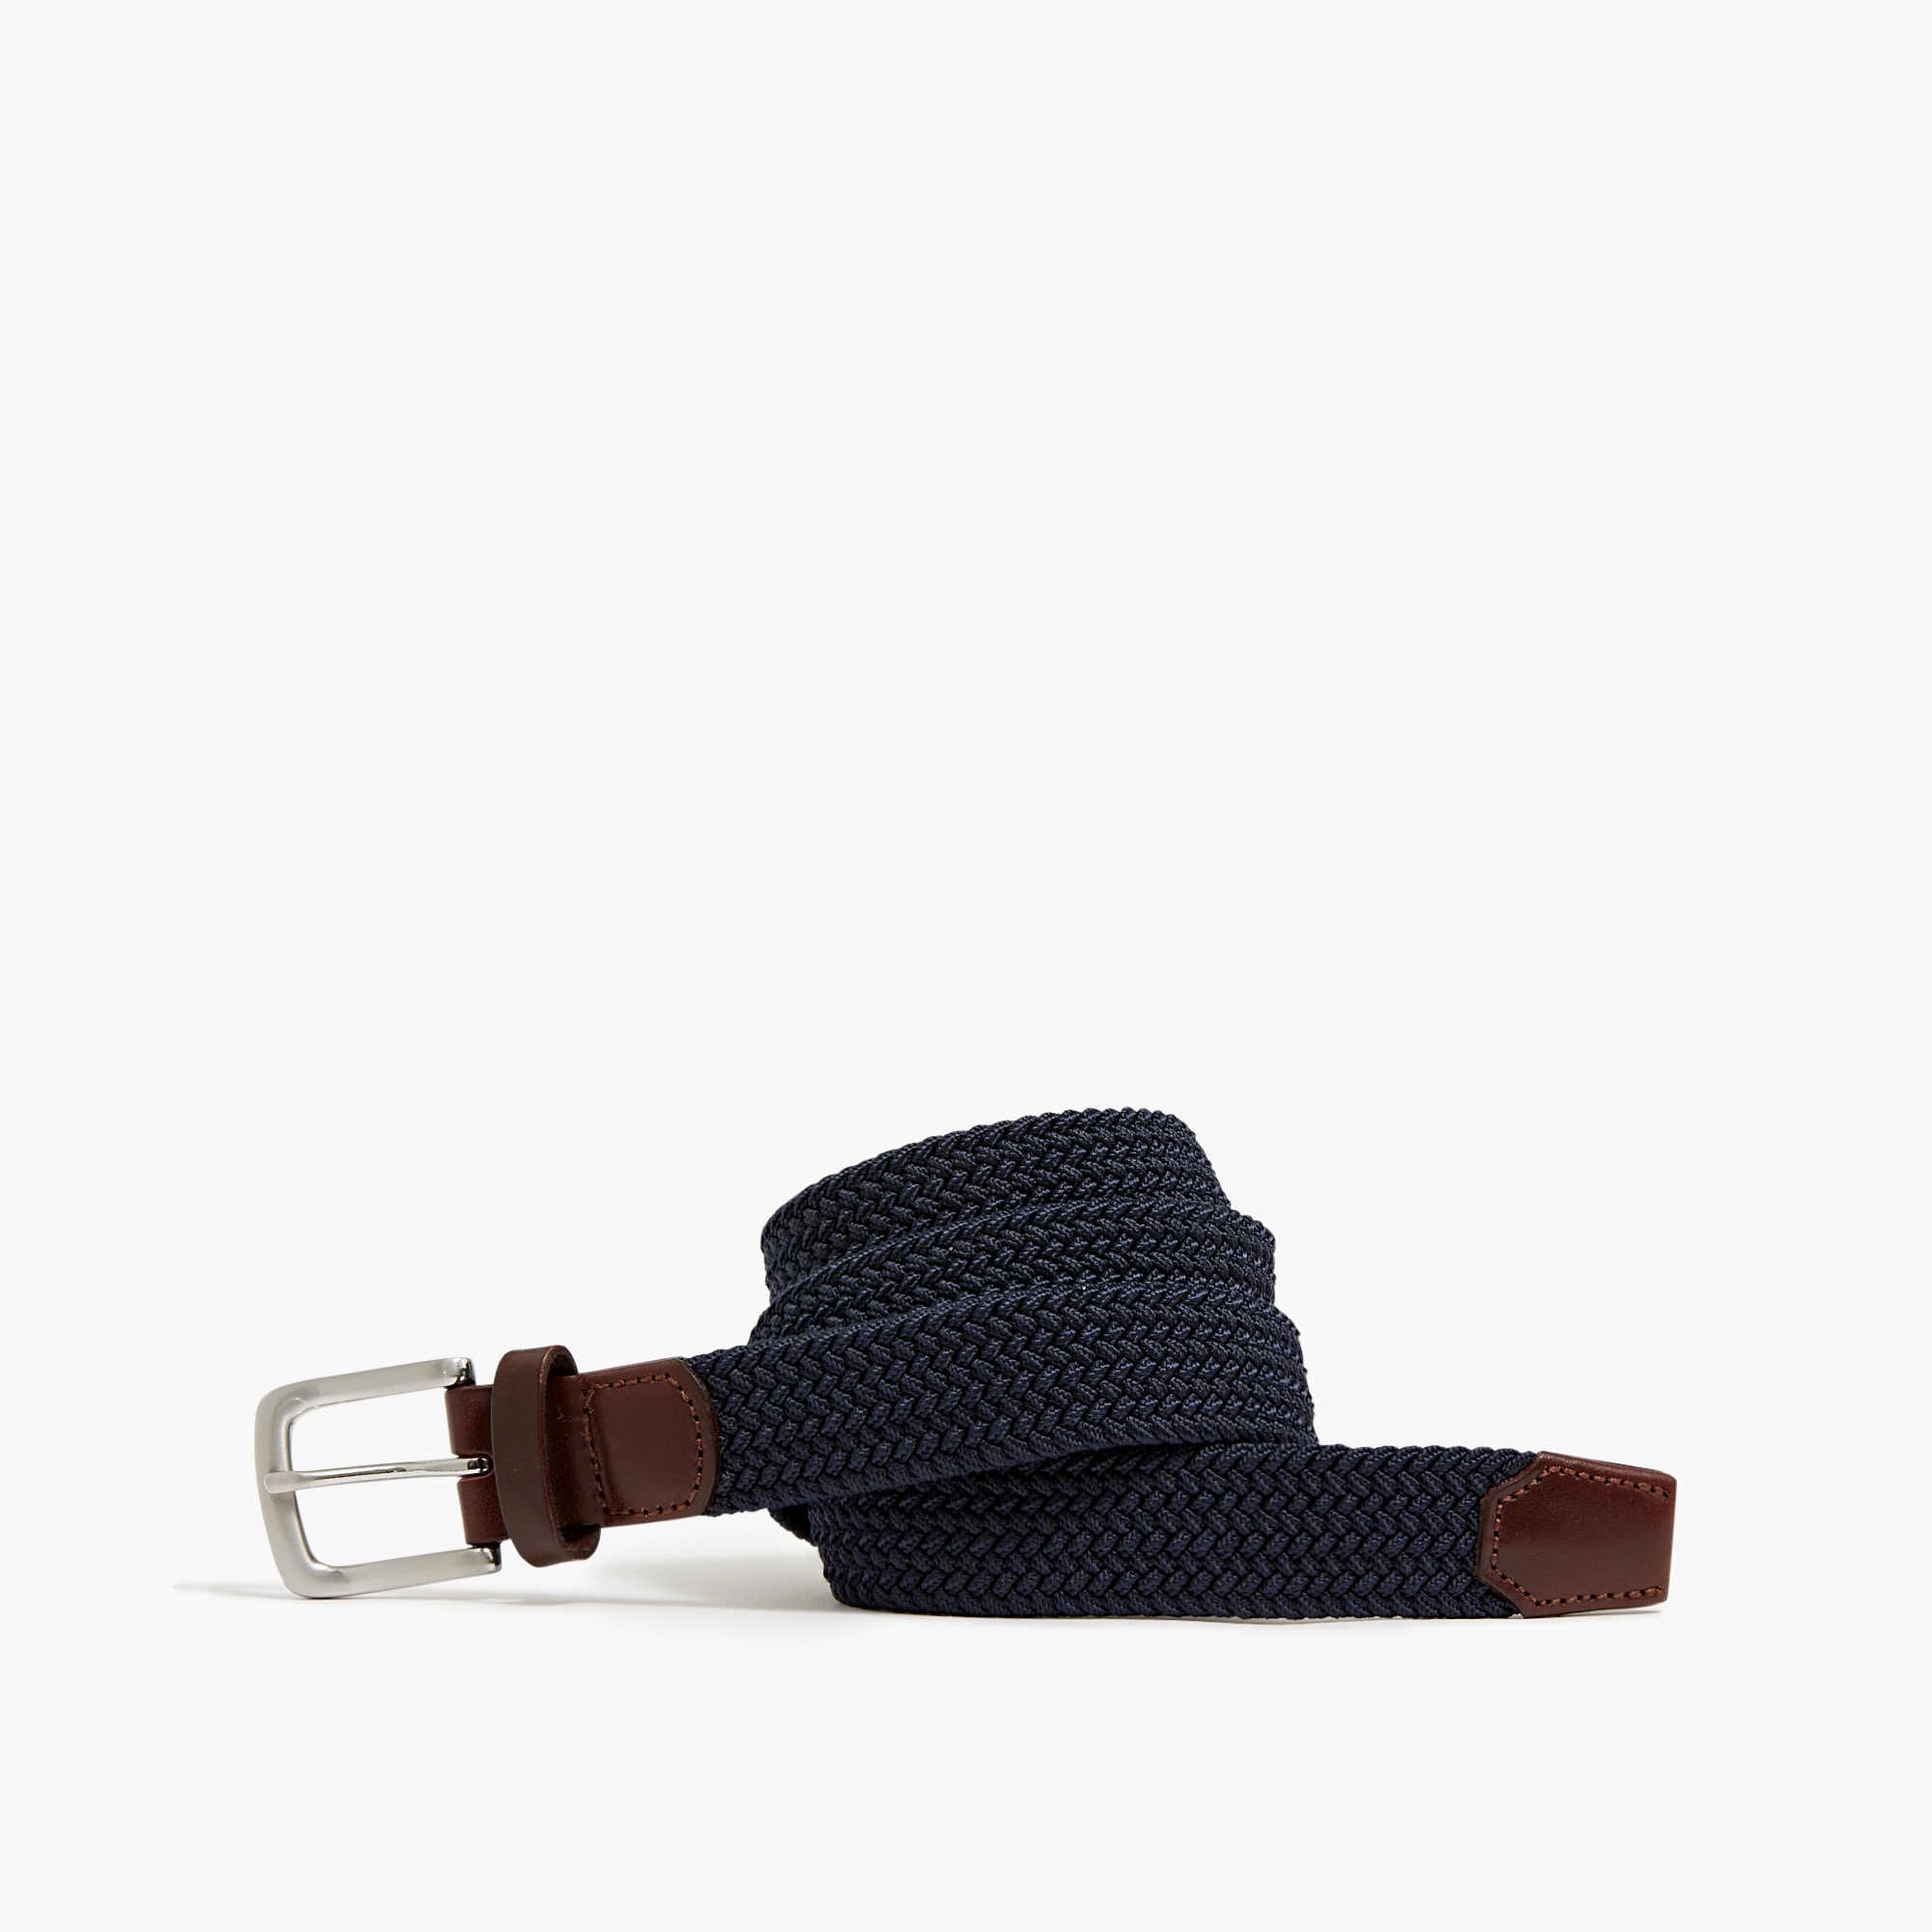 Mixed-rope belt